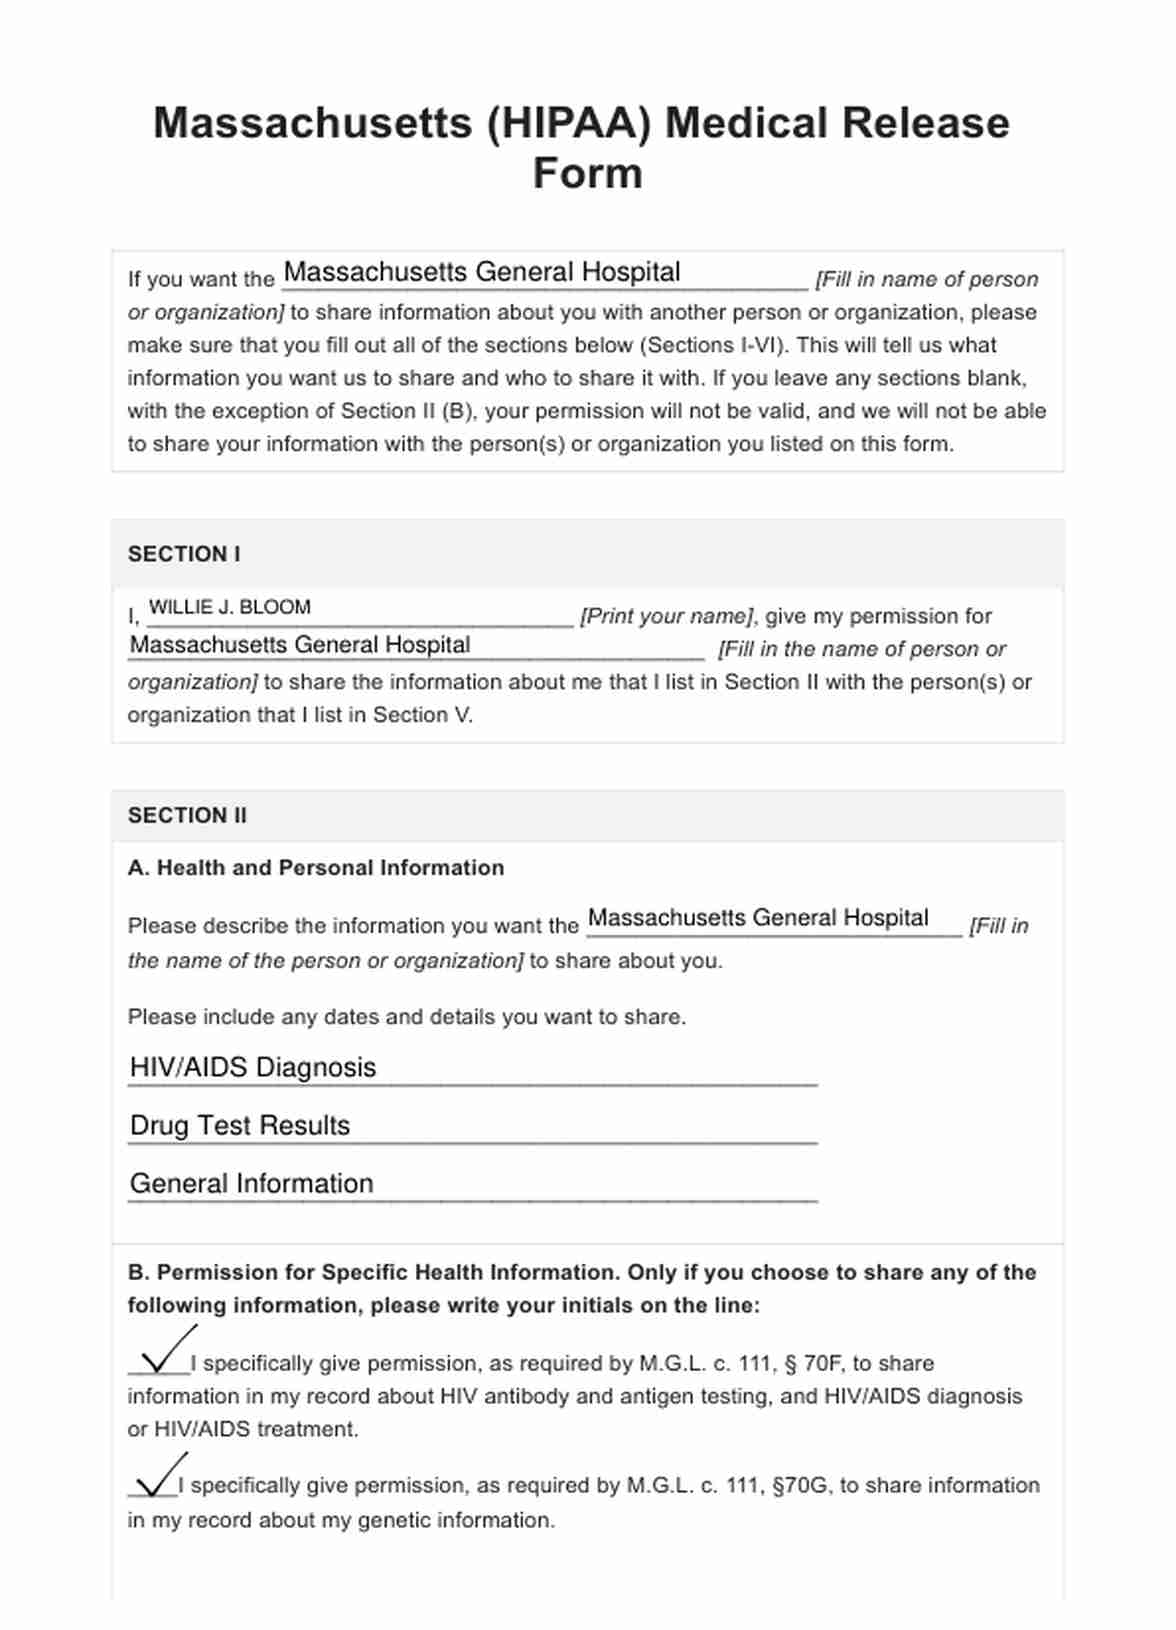 HIPAA Release Form Massachusetts PDF Example